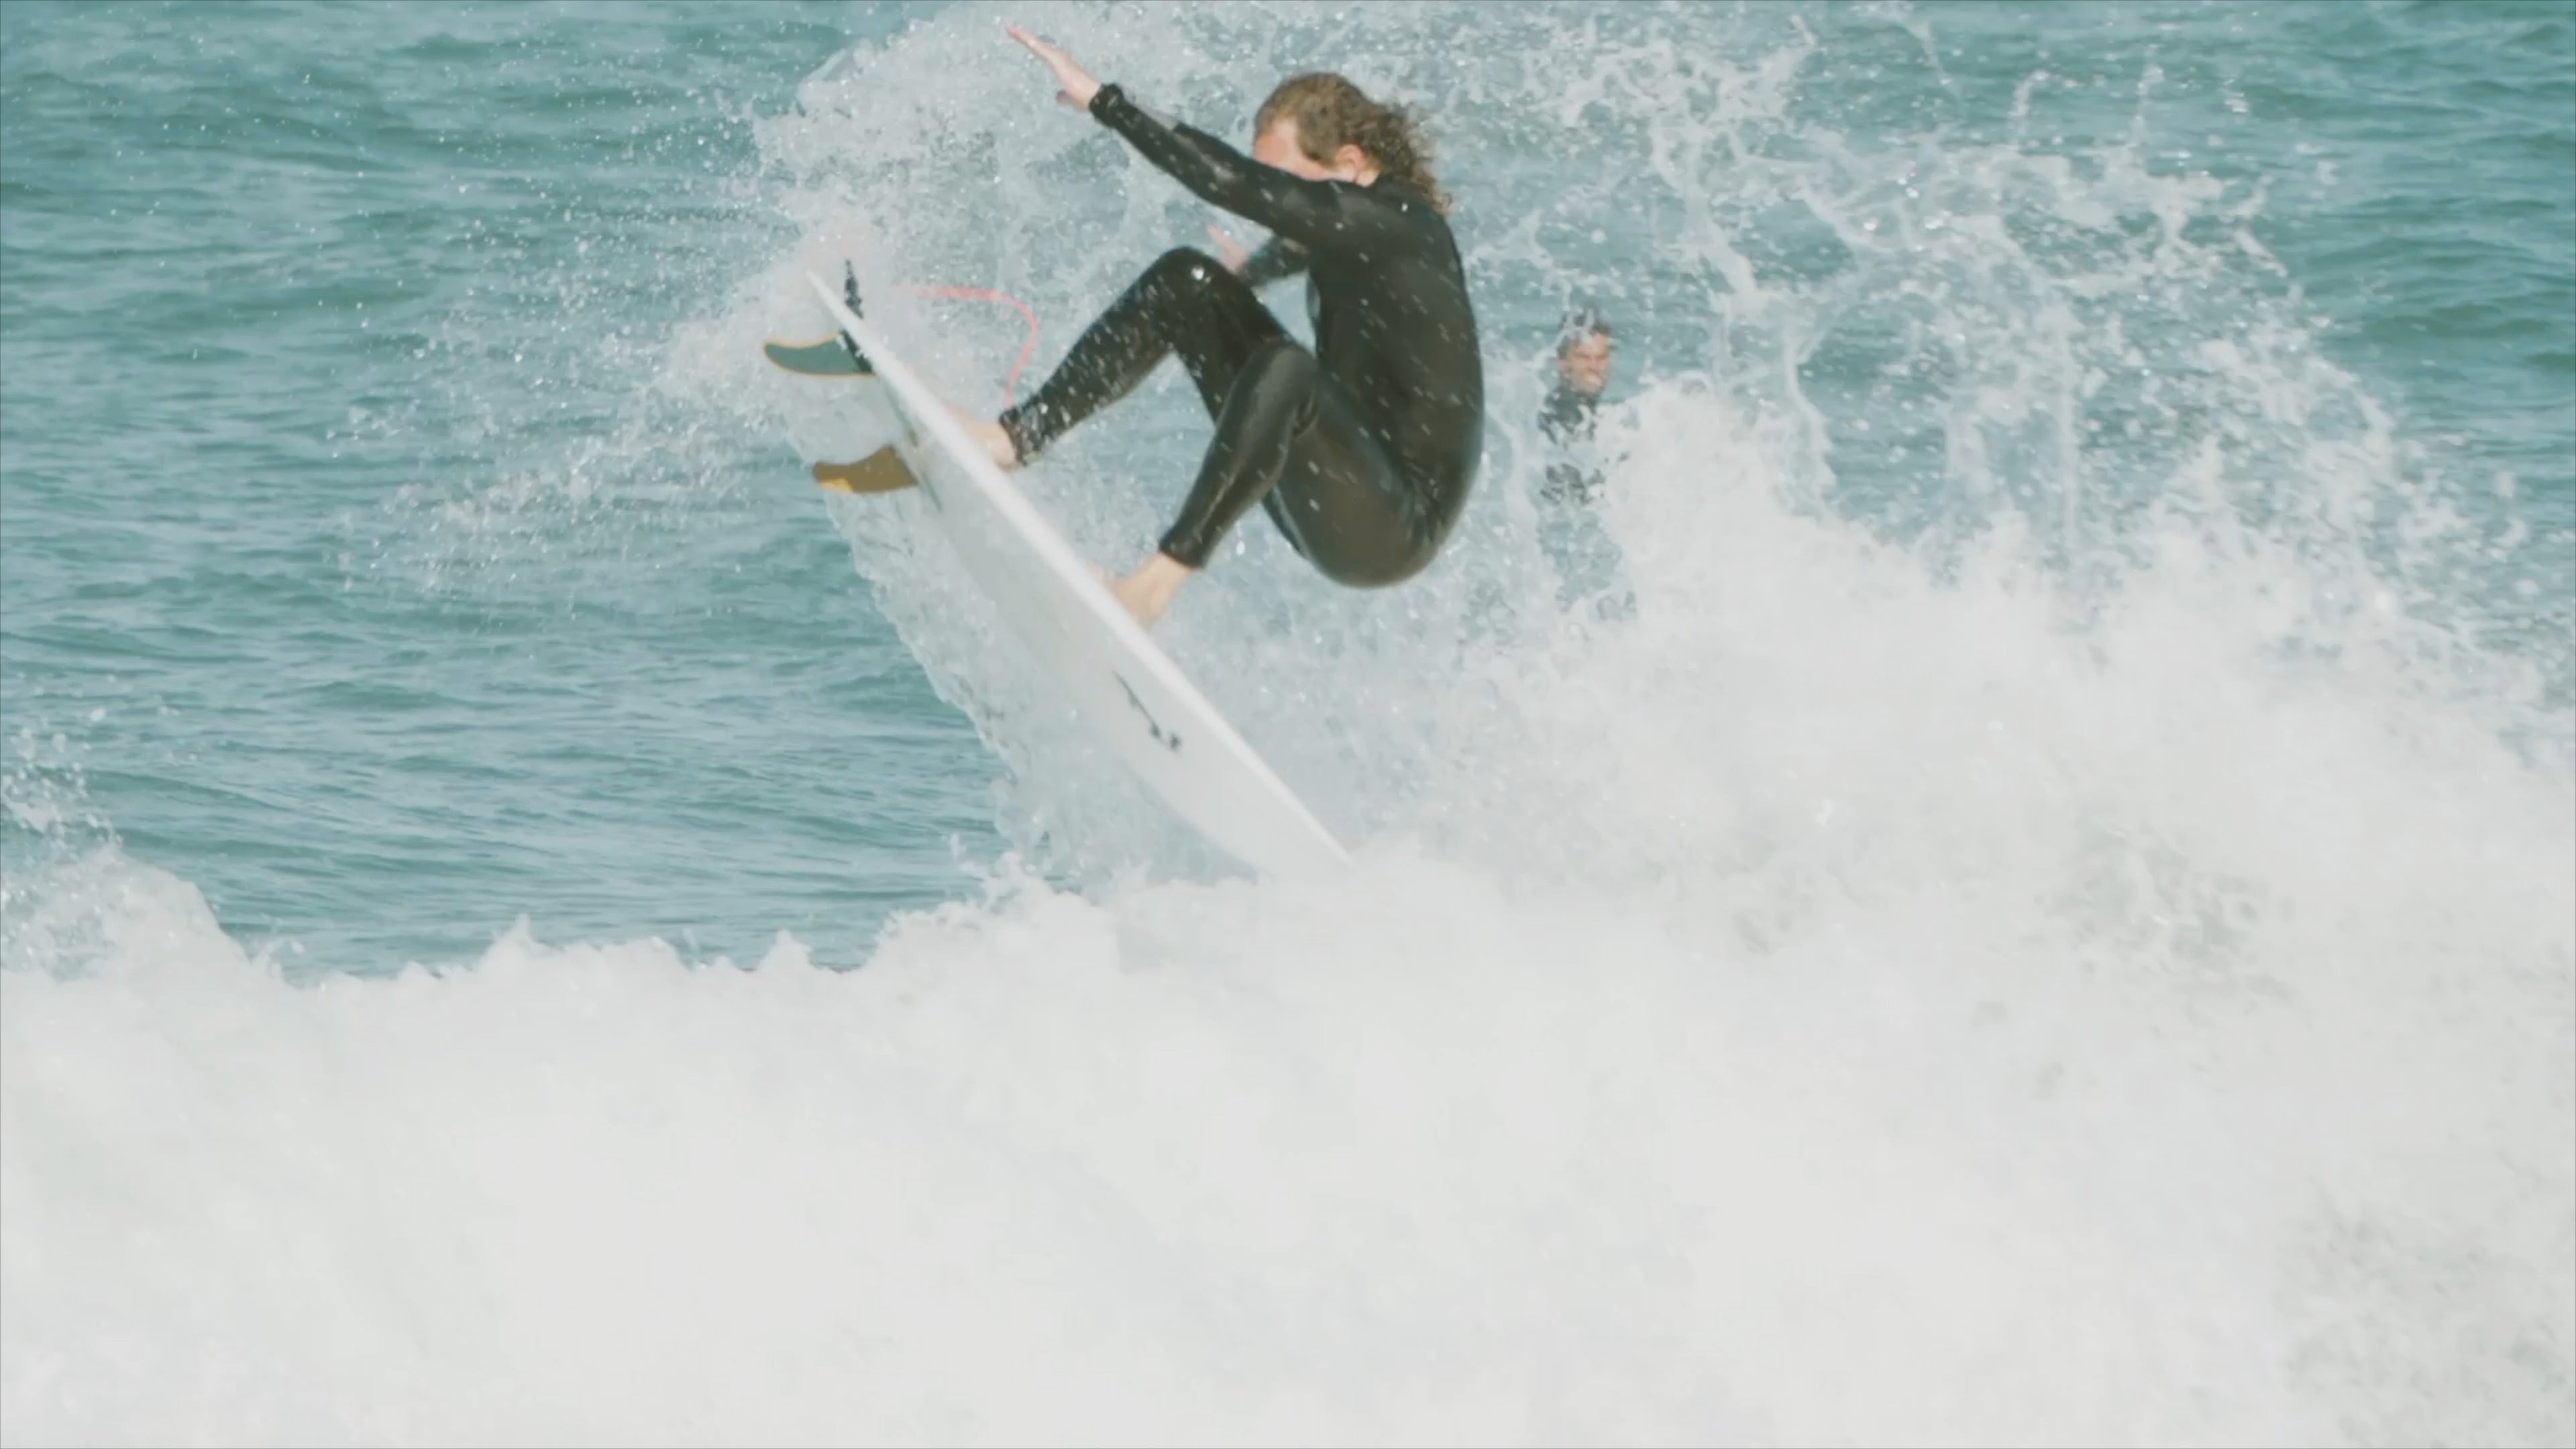 Ian Wooly Macpherson reviews The Deuce Twin Fin Surfboard by Rusty Preisendorfer and Noel Salas